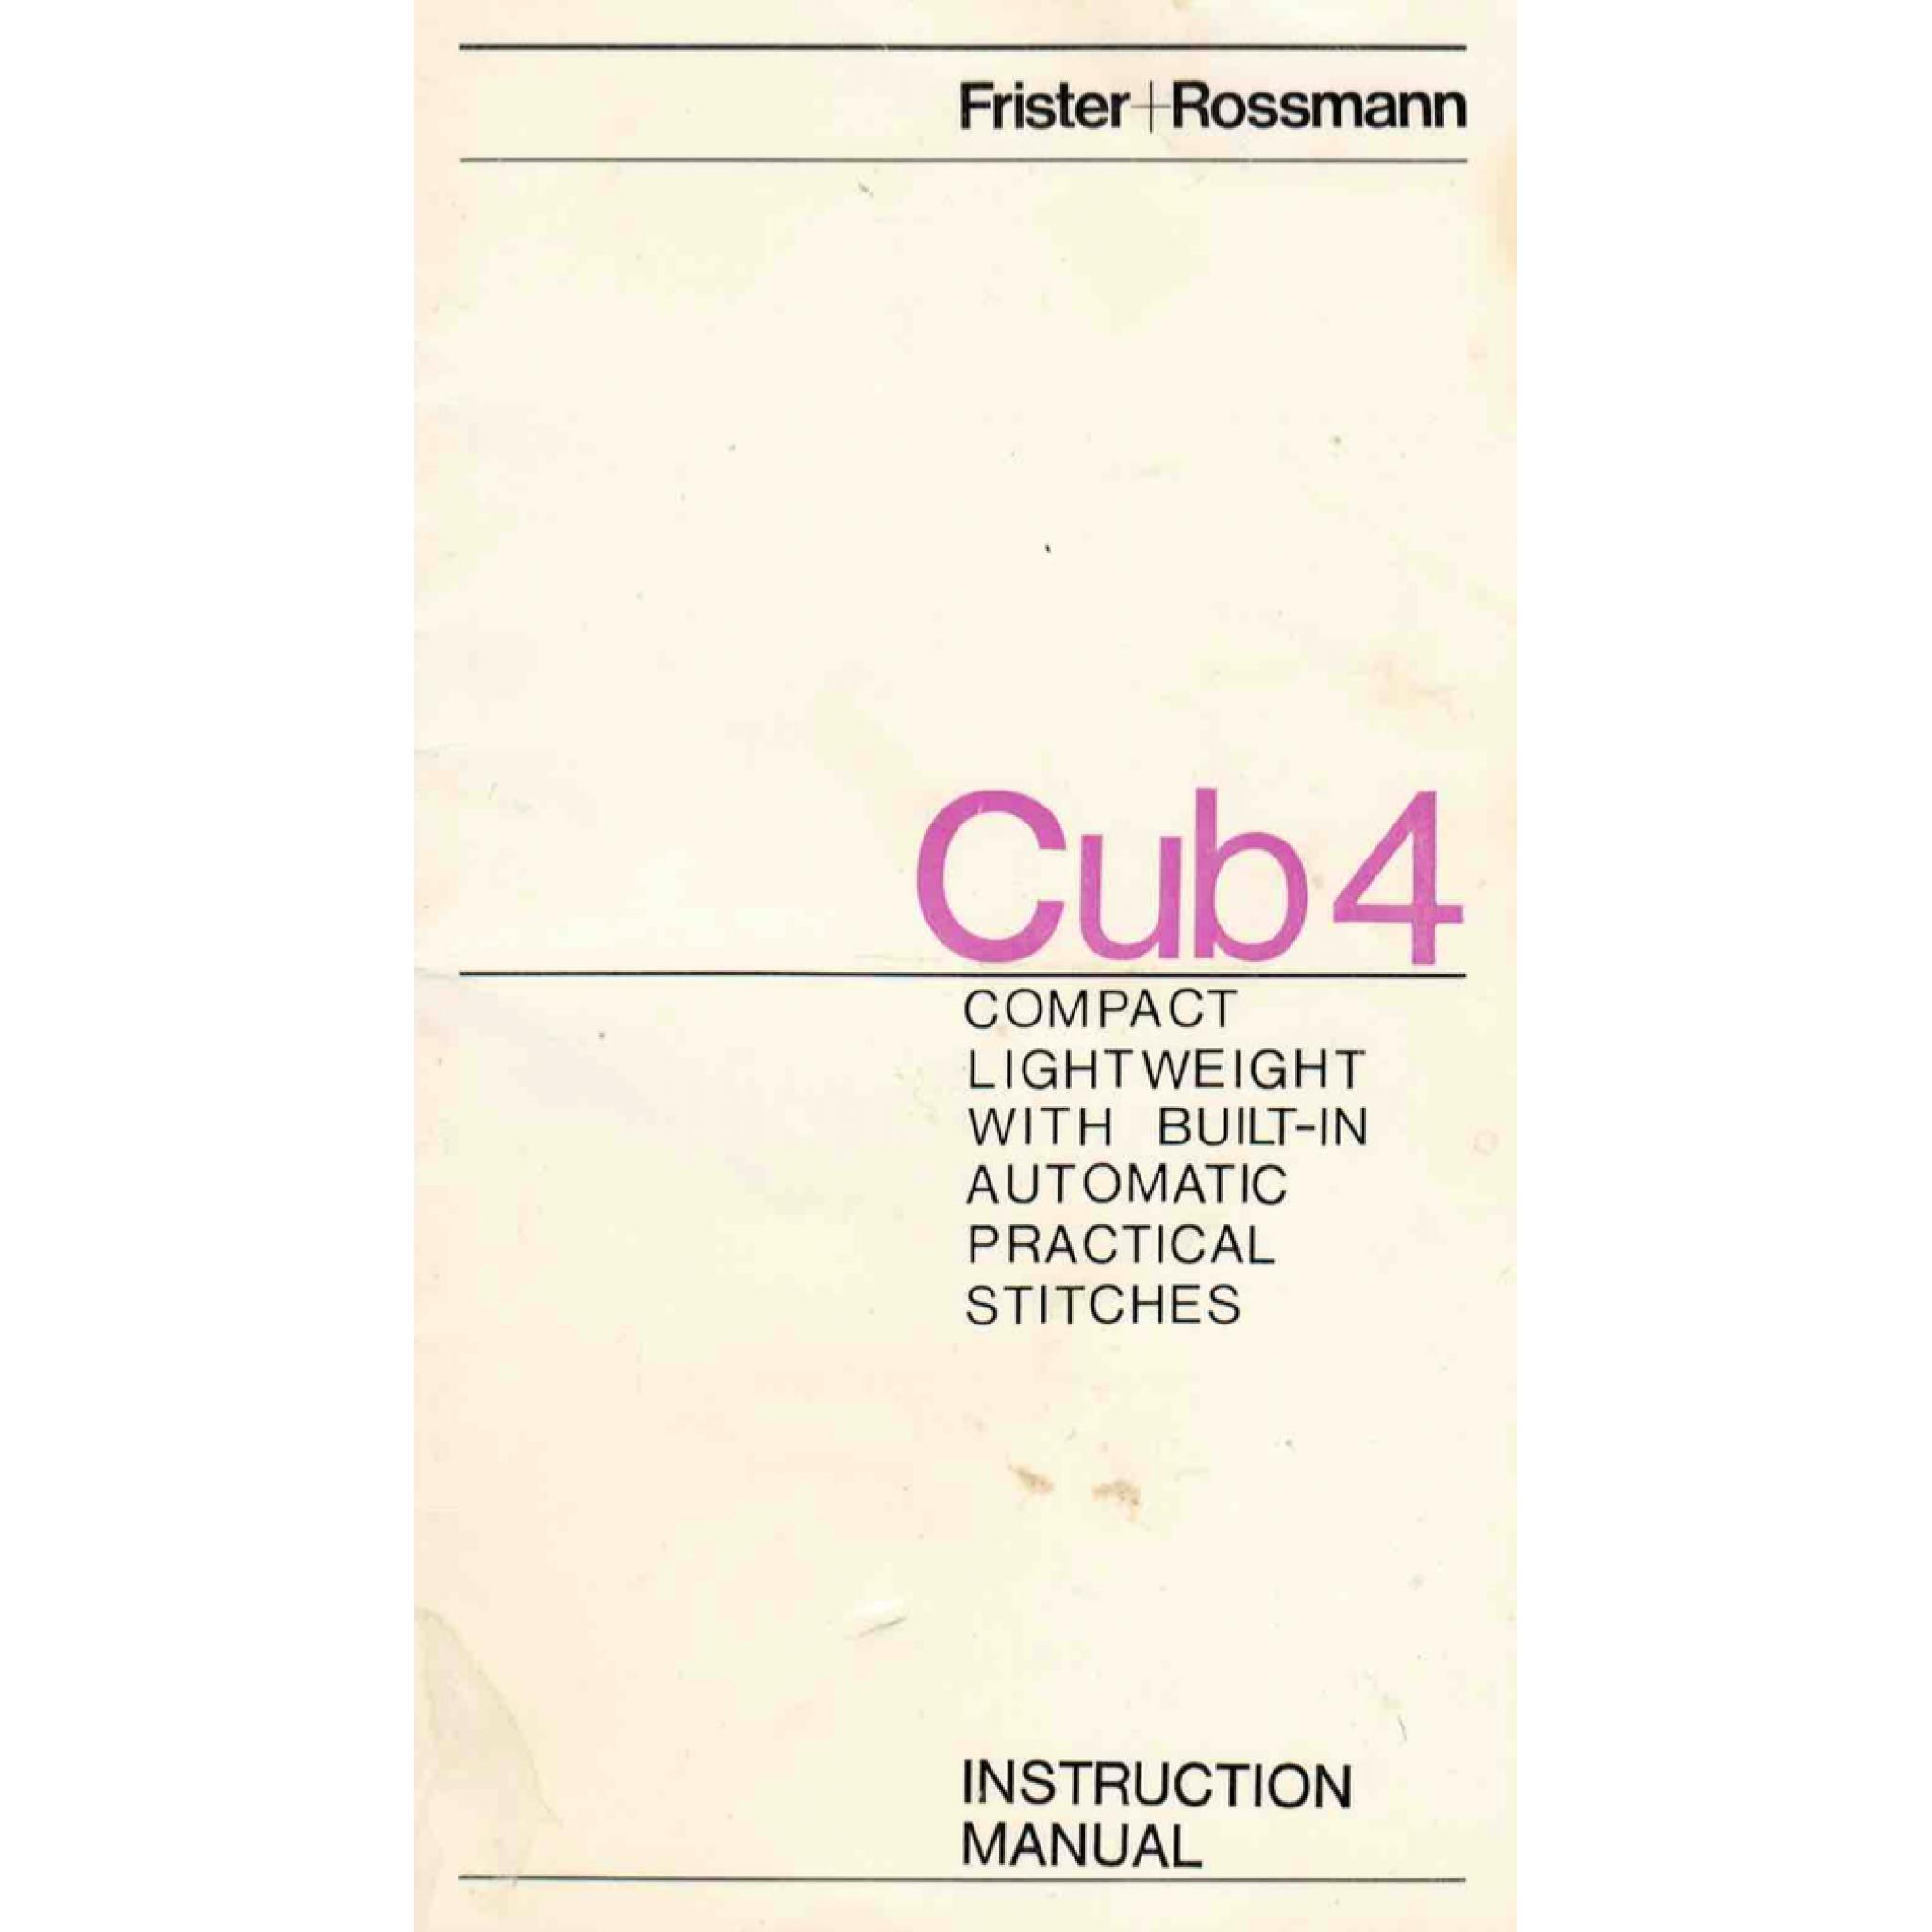 Frister rossmann cub 7 instruction manual